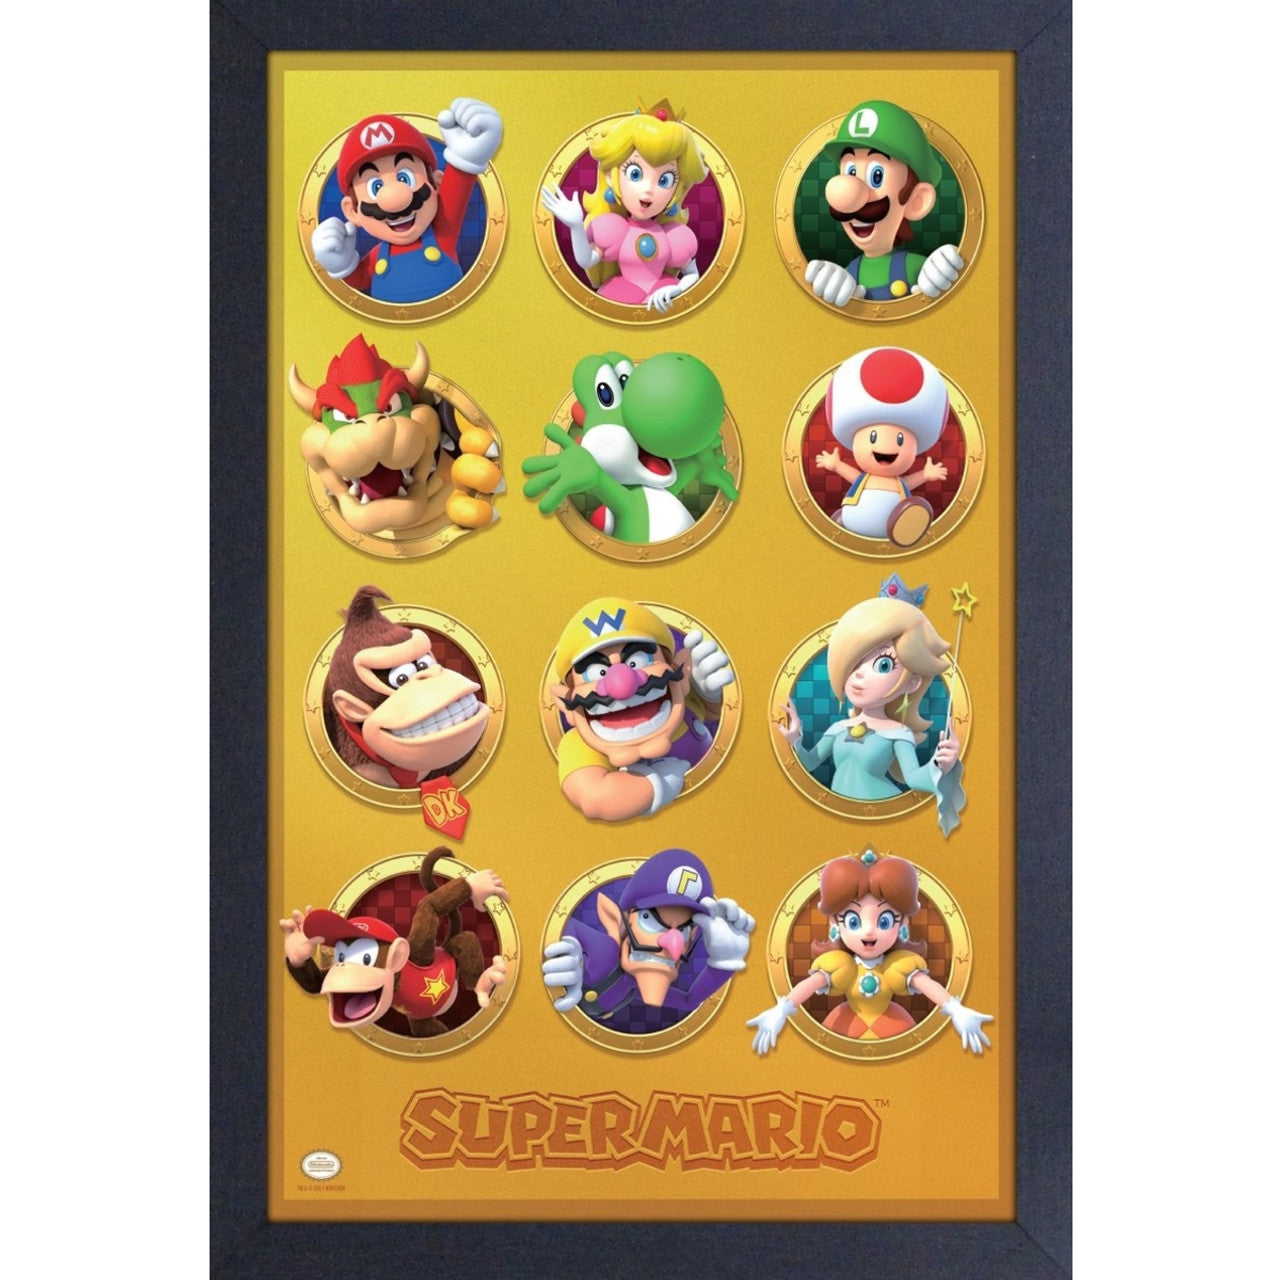 Framed Prints 11 x 17 - Super Mario Gold Group